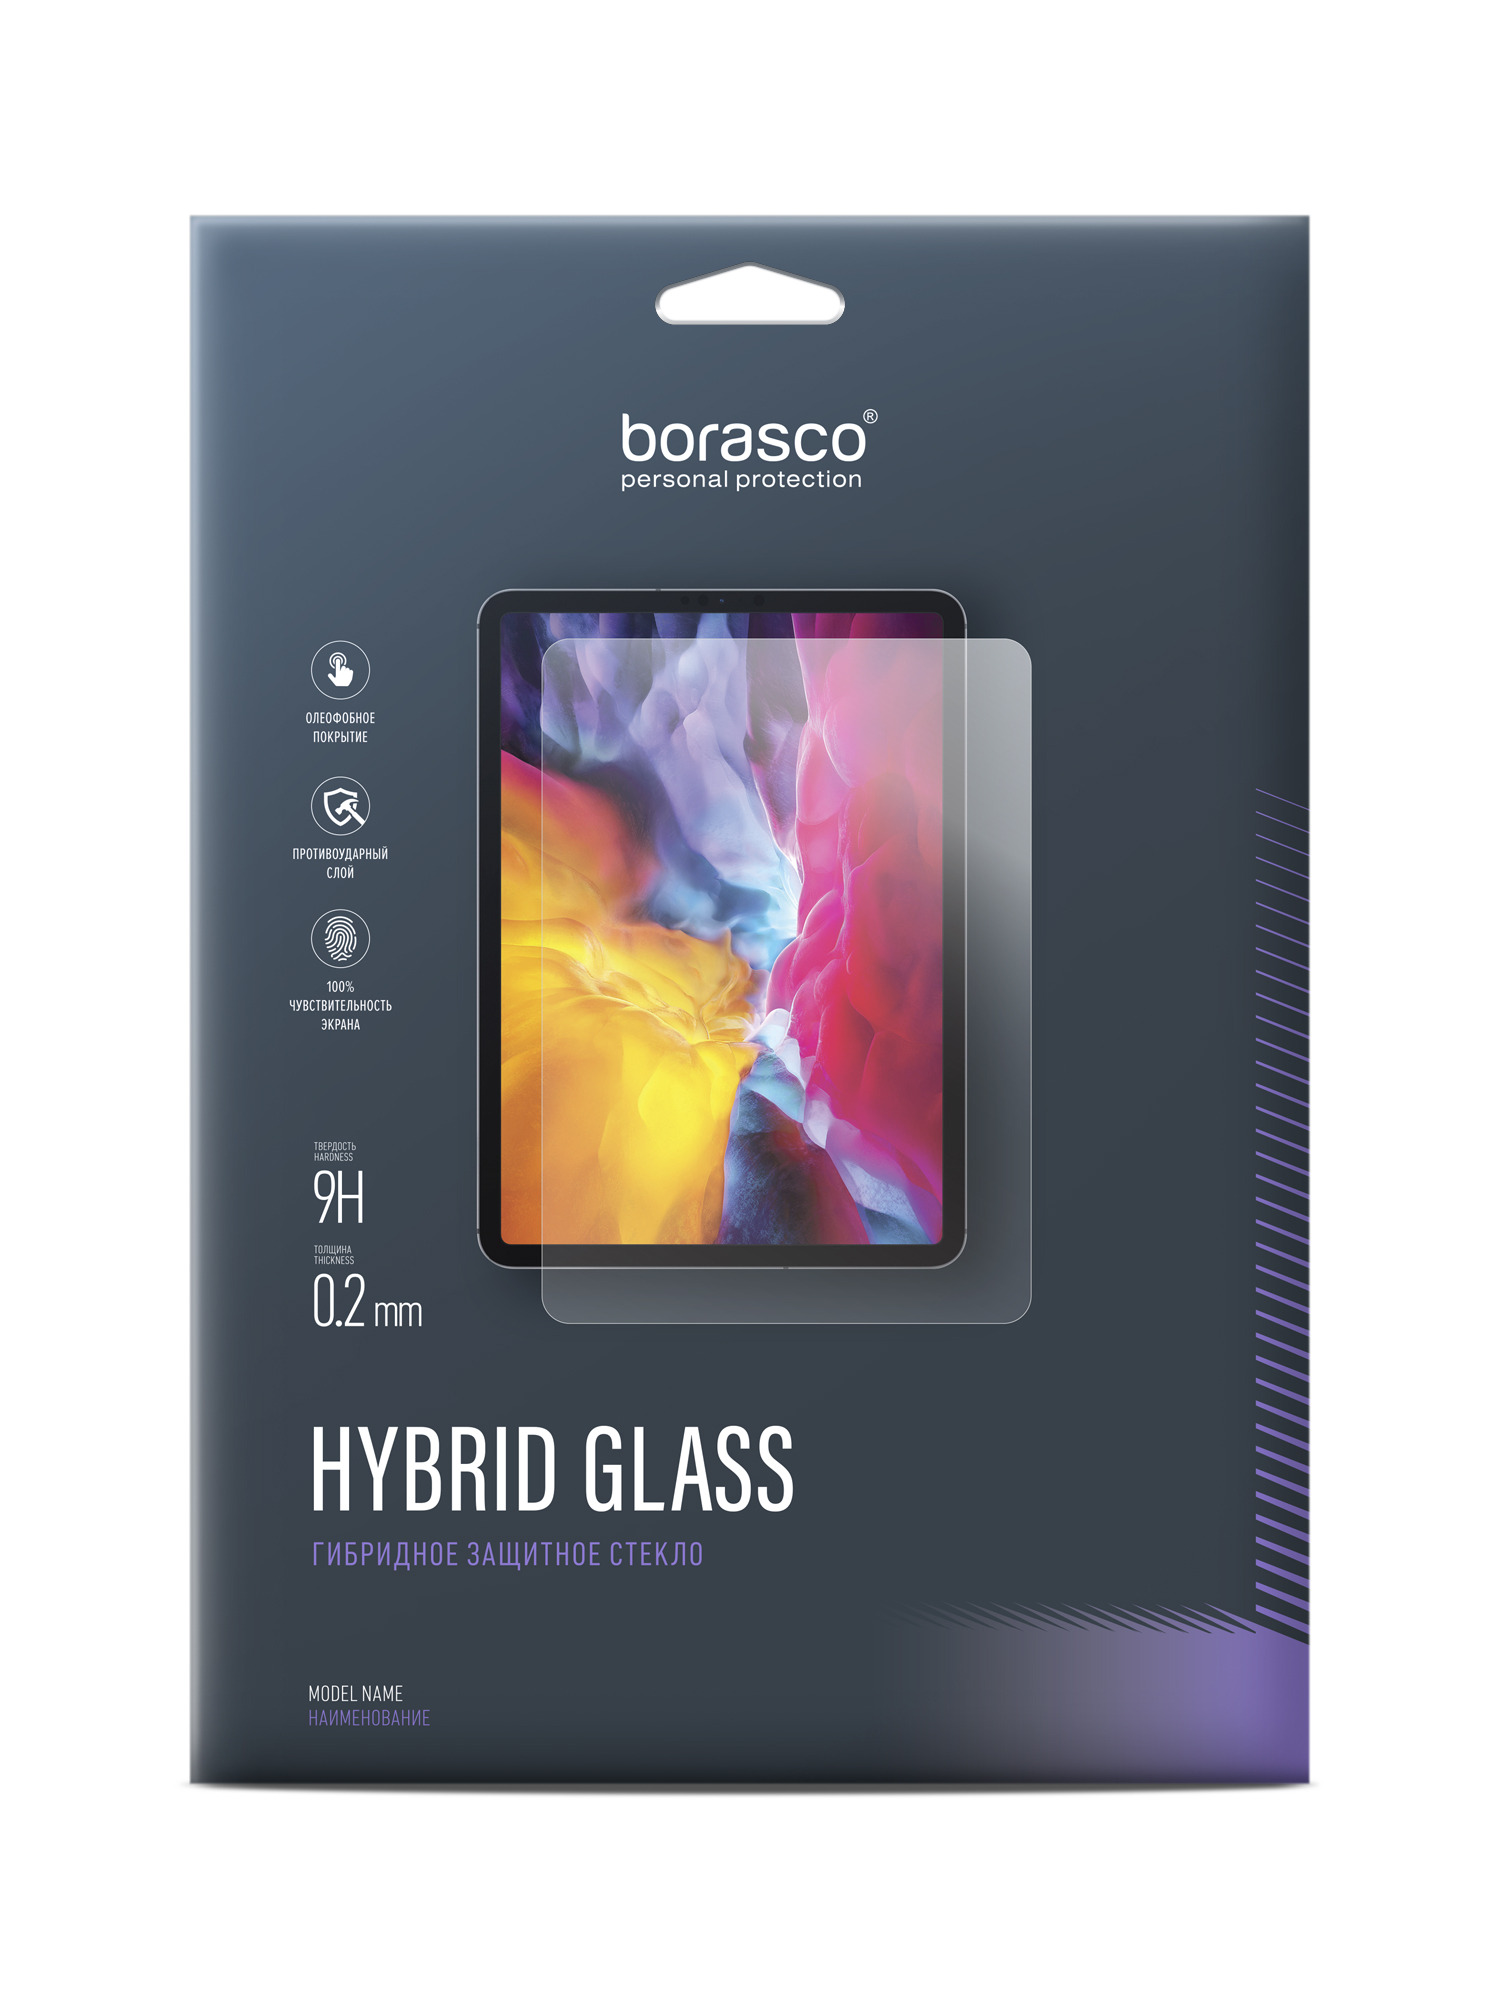 Защитное стекло Hybrid Glass для Sony Xperia Z2 Tablet защитное стекло на sony xperia xz2 compact